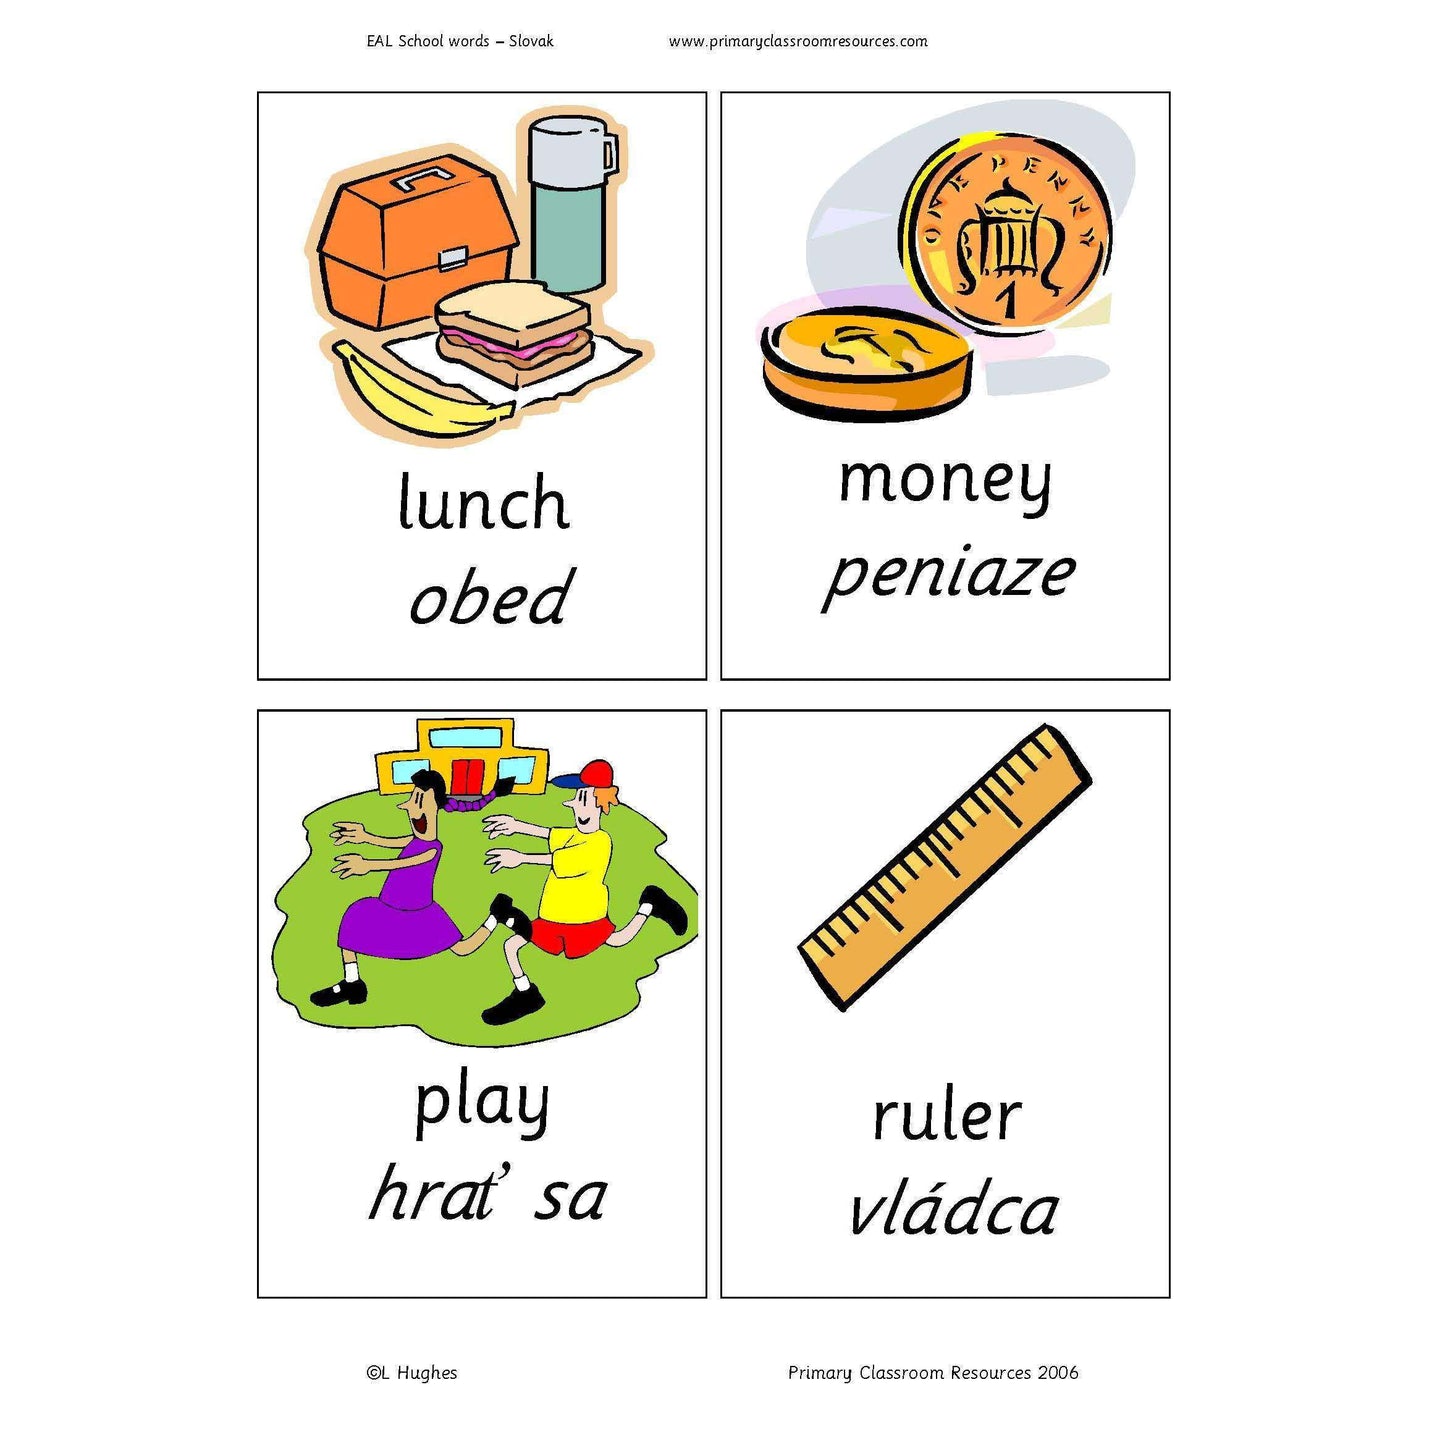 Slovak School Words:Primary Classroom Resources